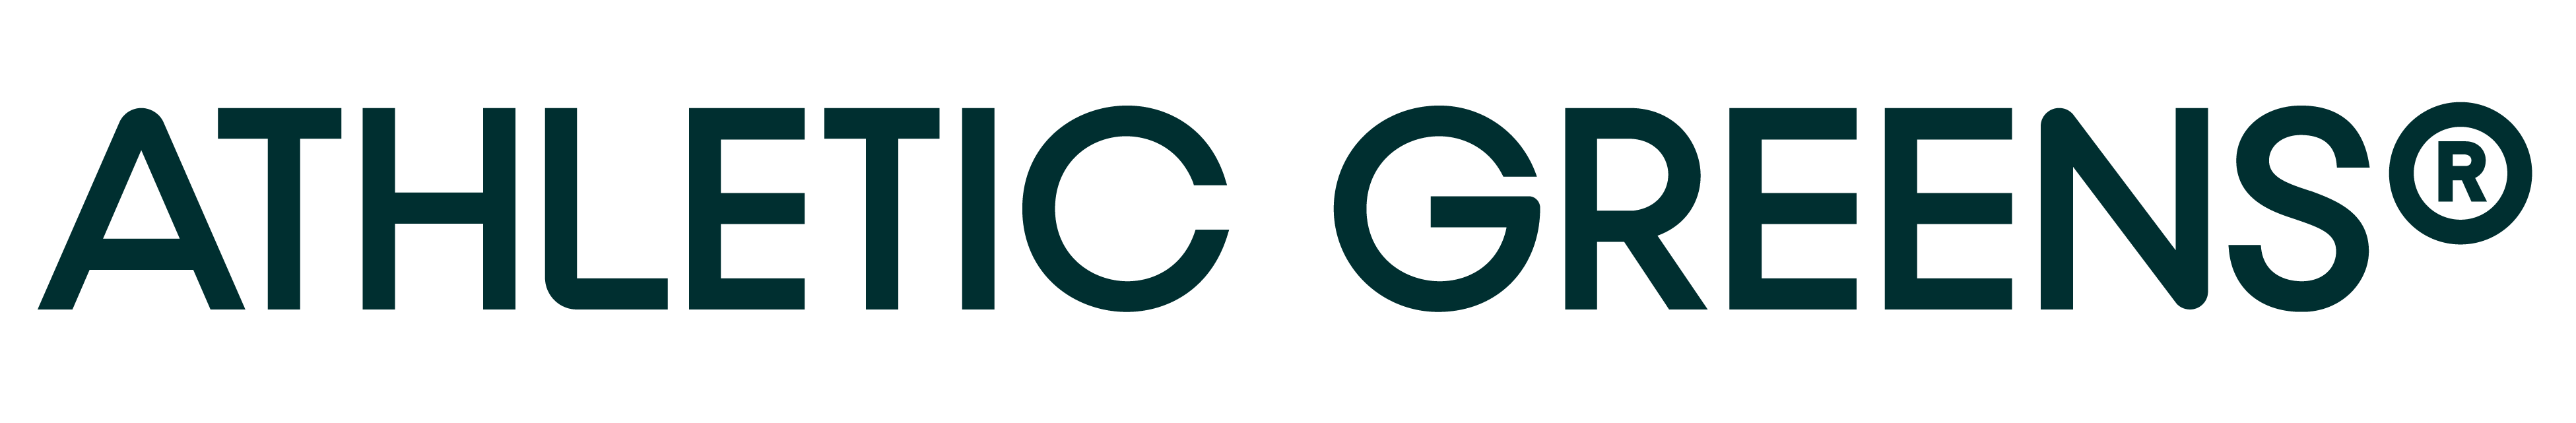 Athletic-Greens-Logo